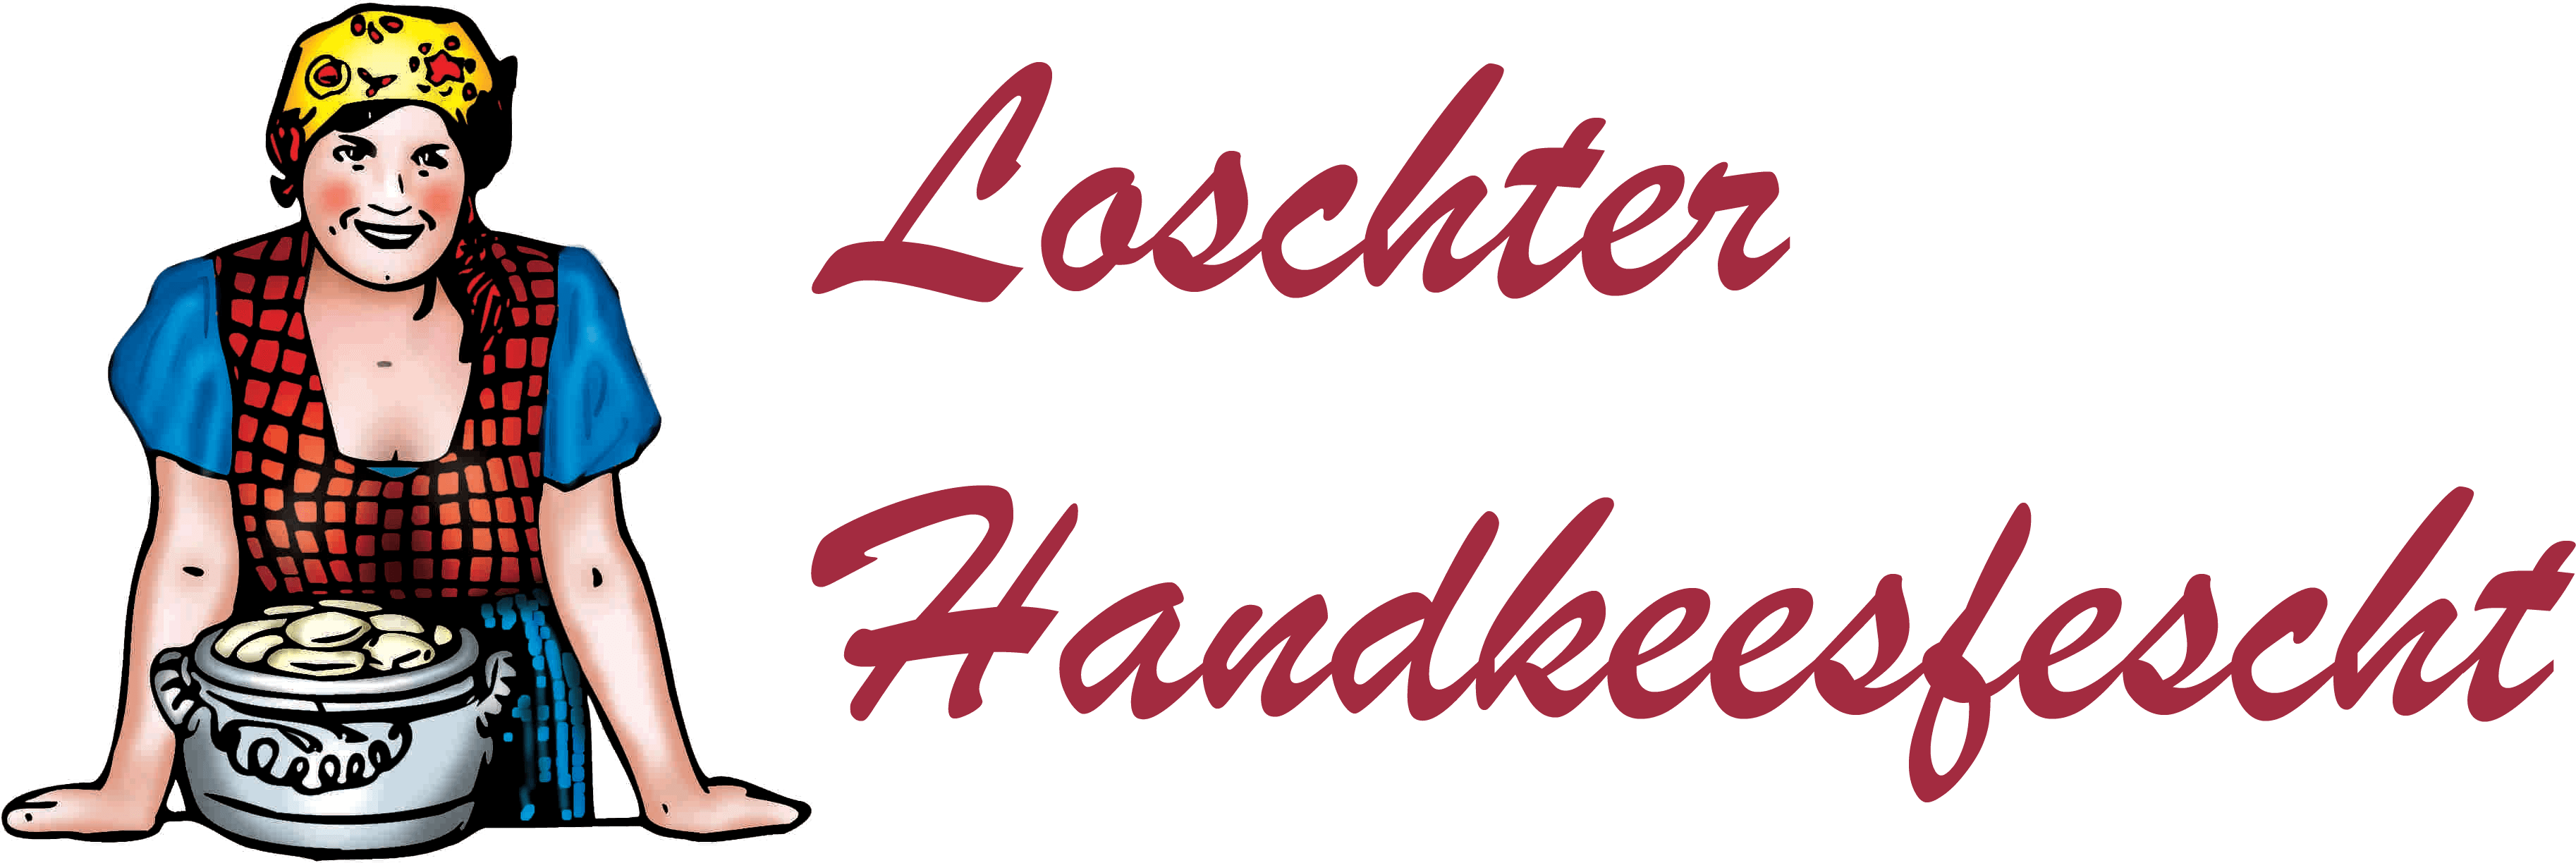 Logo Handkeesfescht